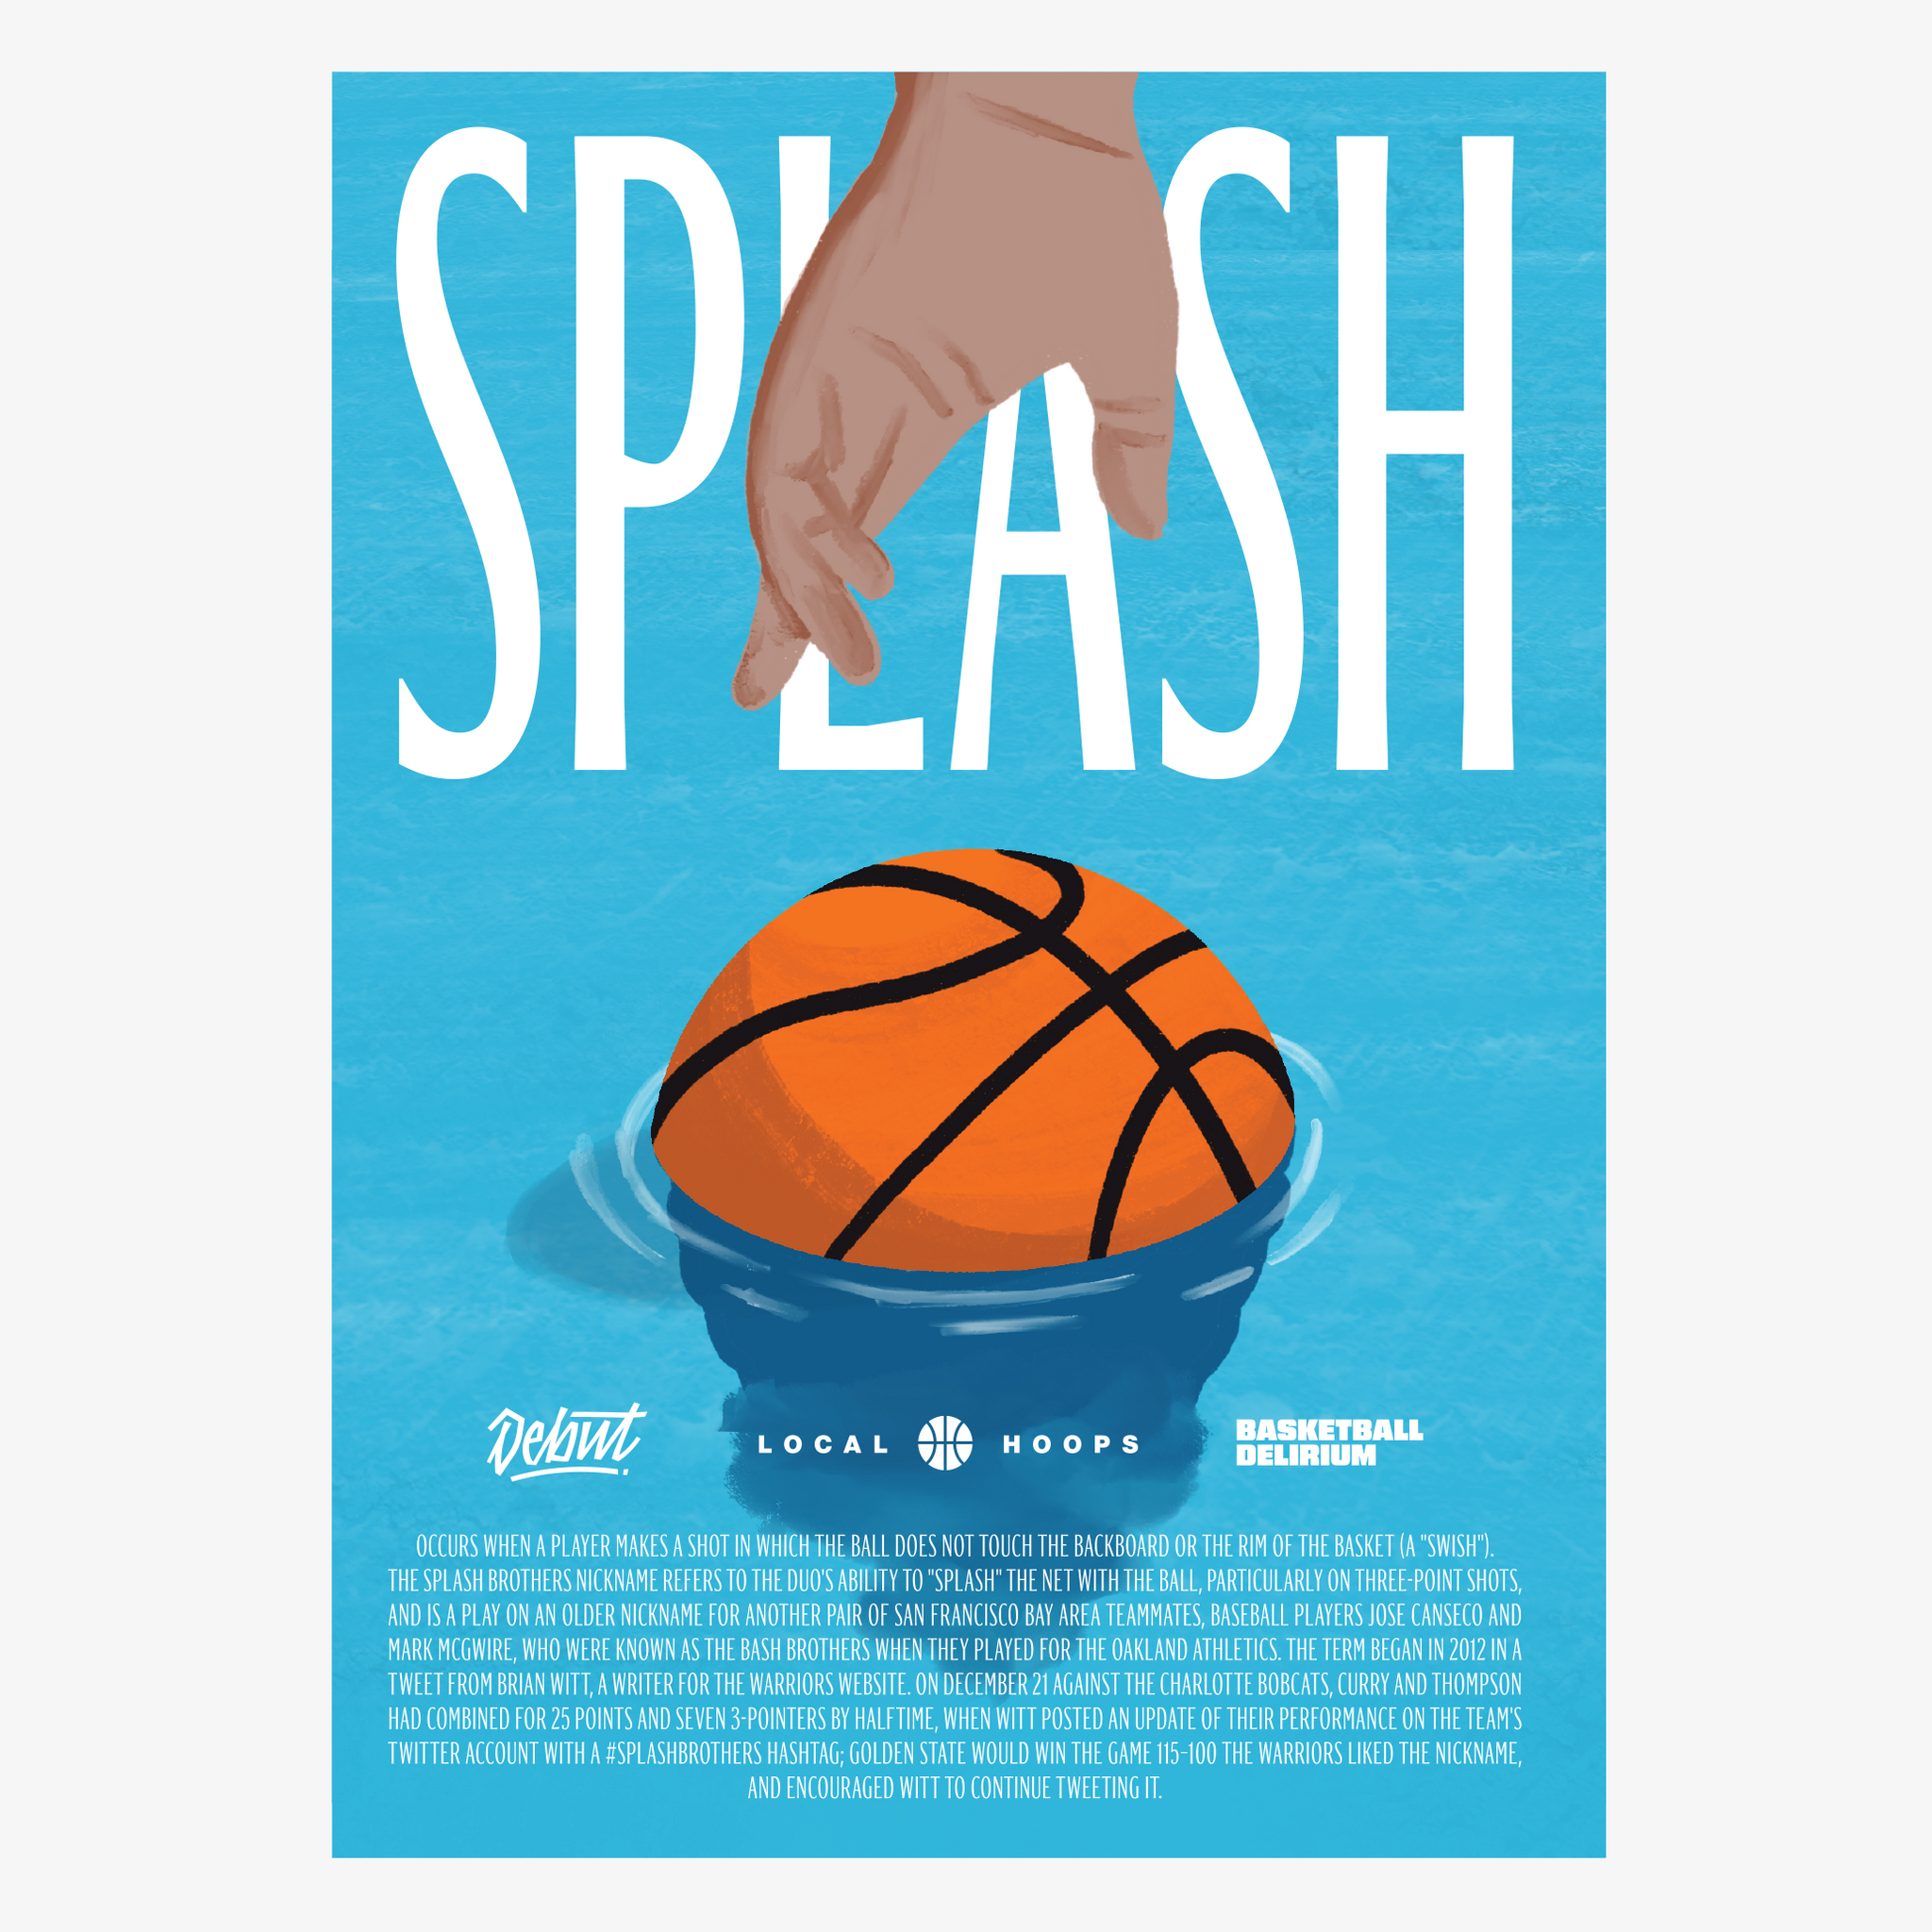 Splash by Jorge Espinoza